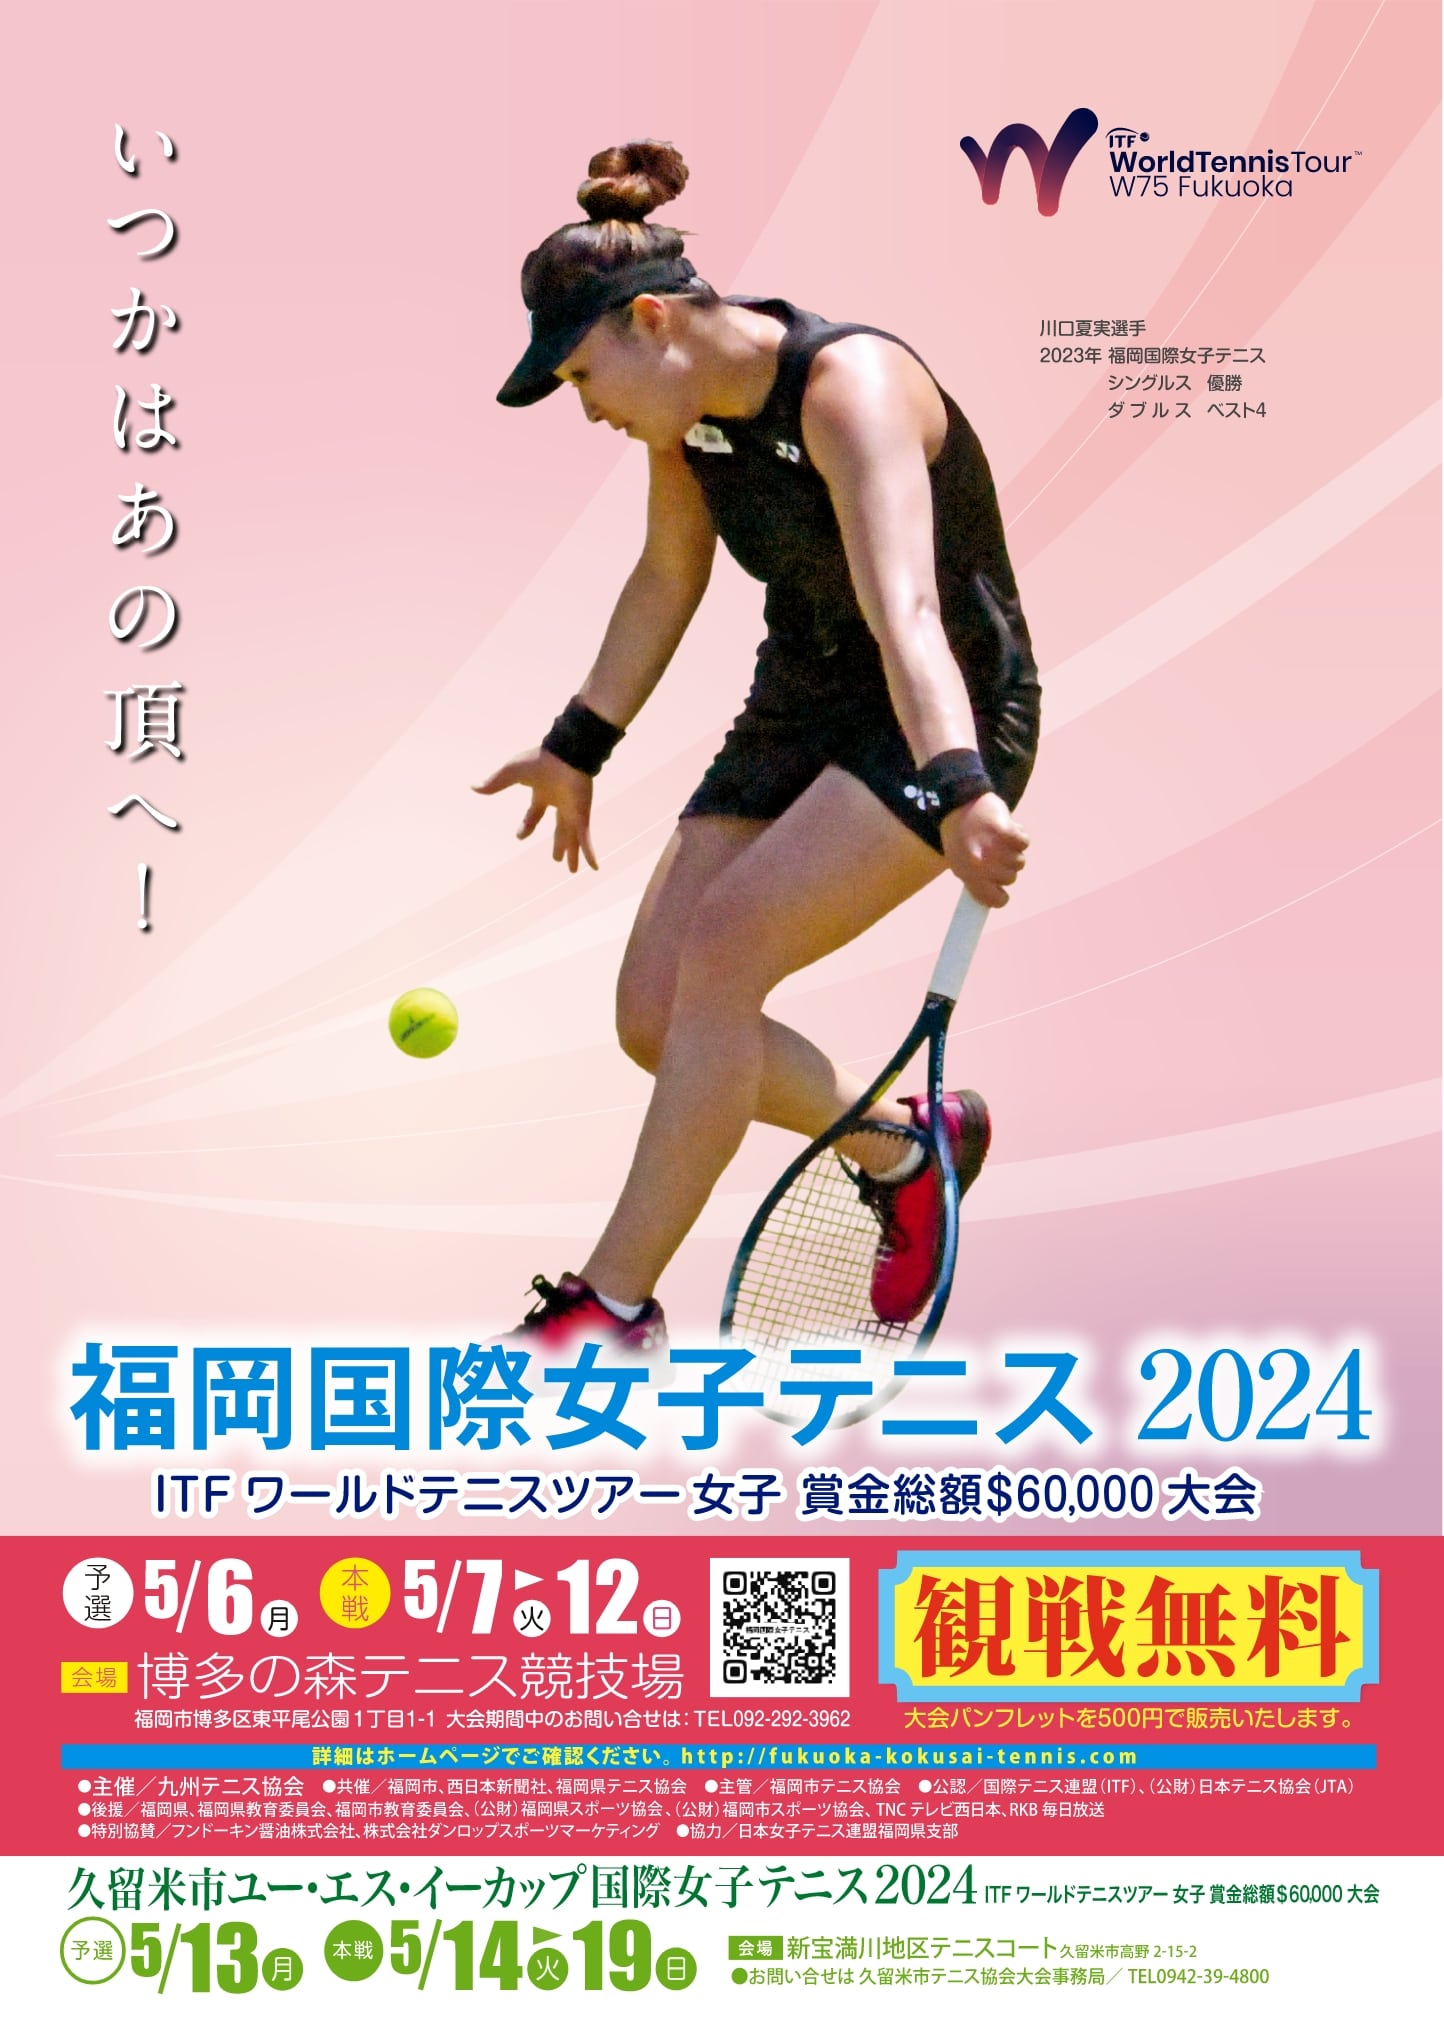 福岡国際女子テニス2024大会概要